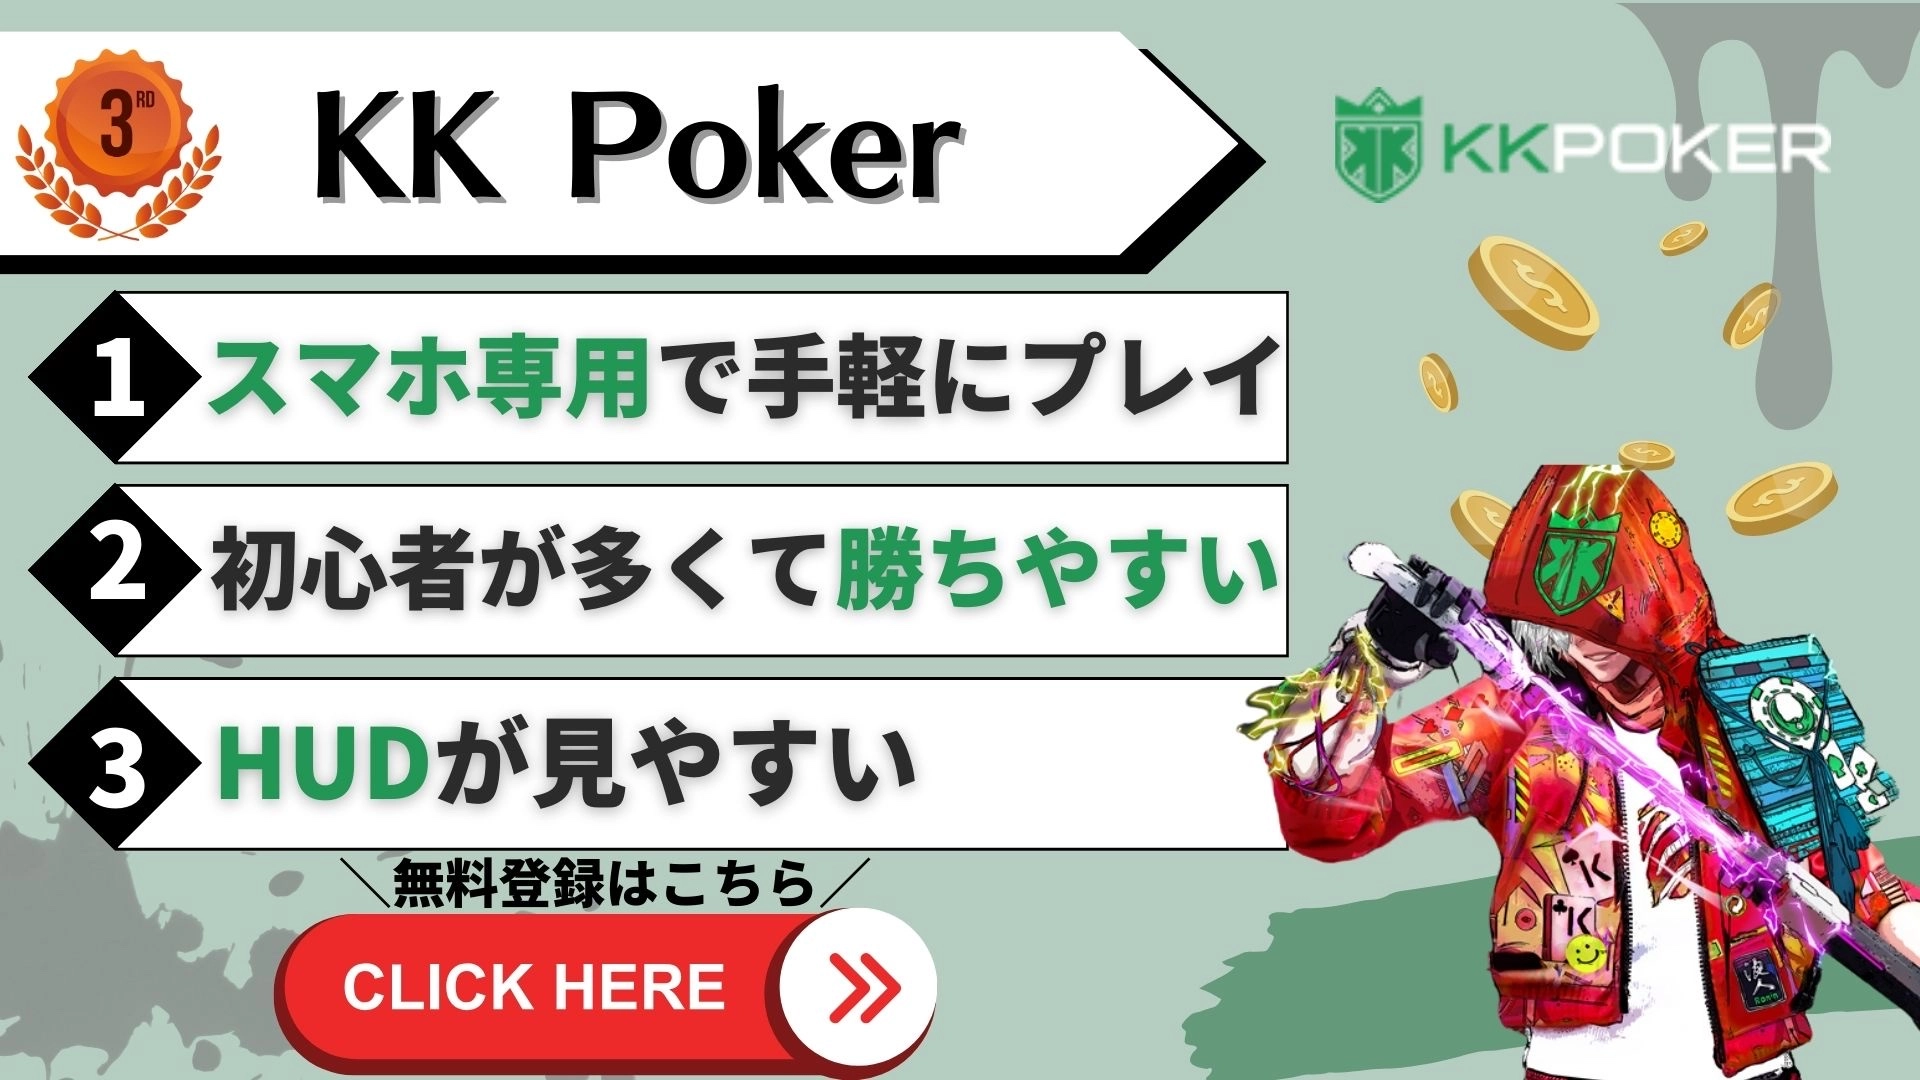 KK Poker(KKポーカー)の3つの特徴について説明した画像